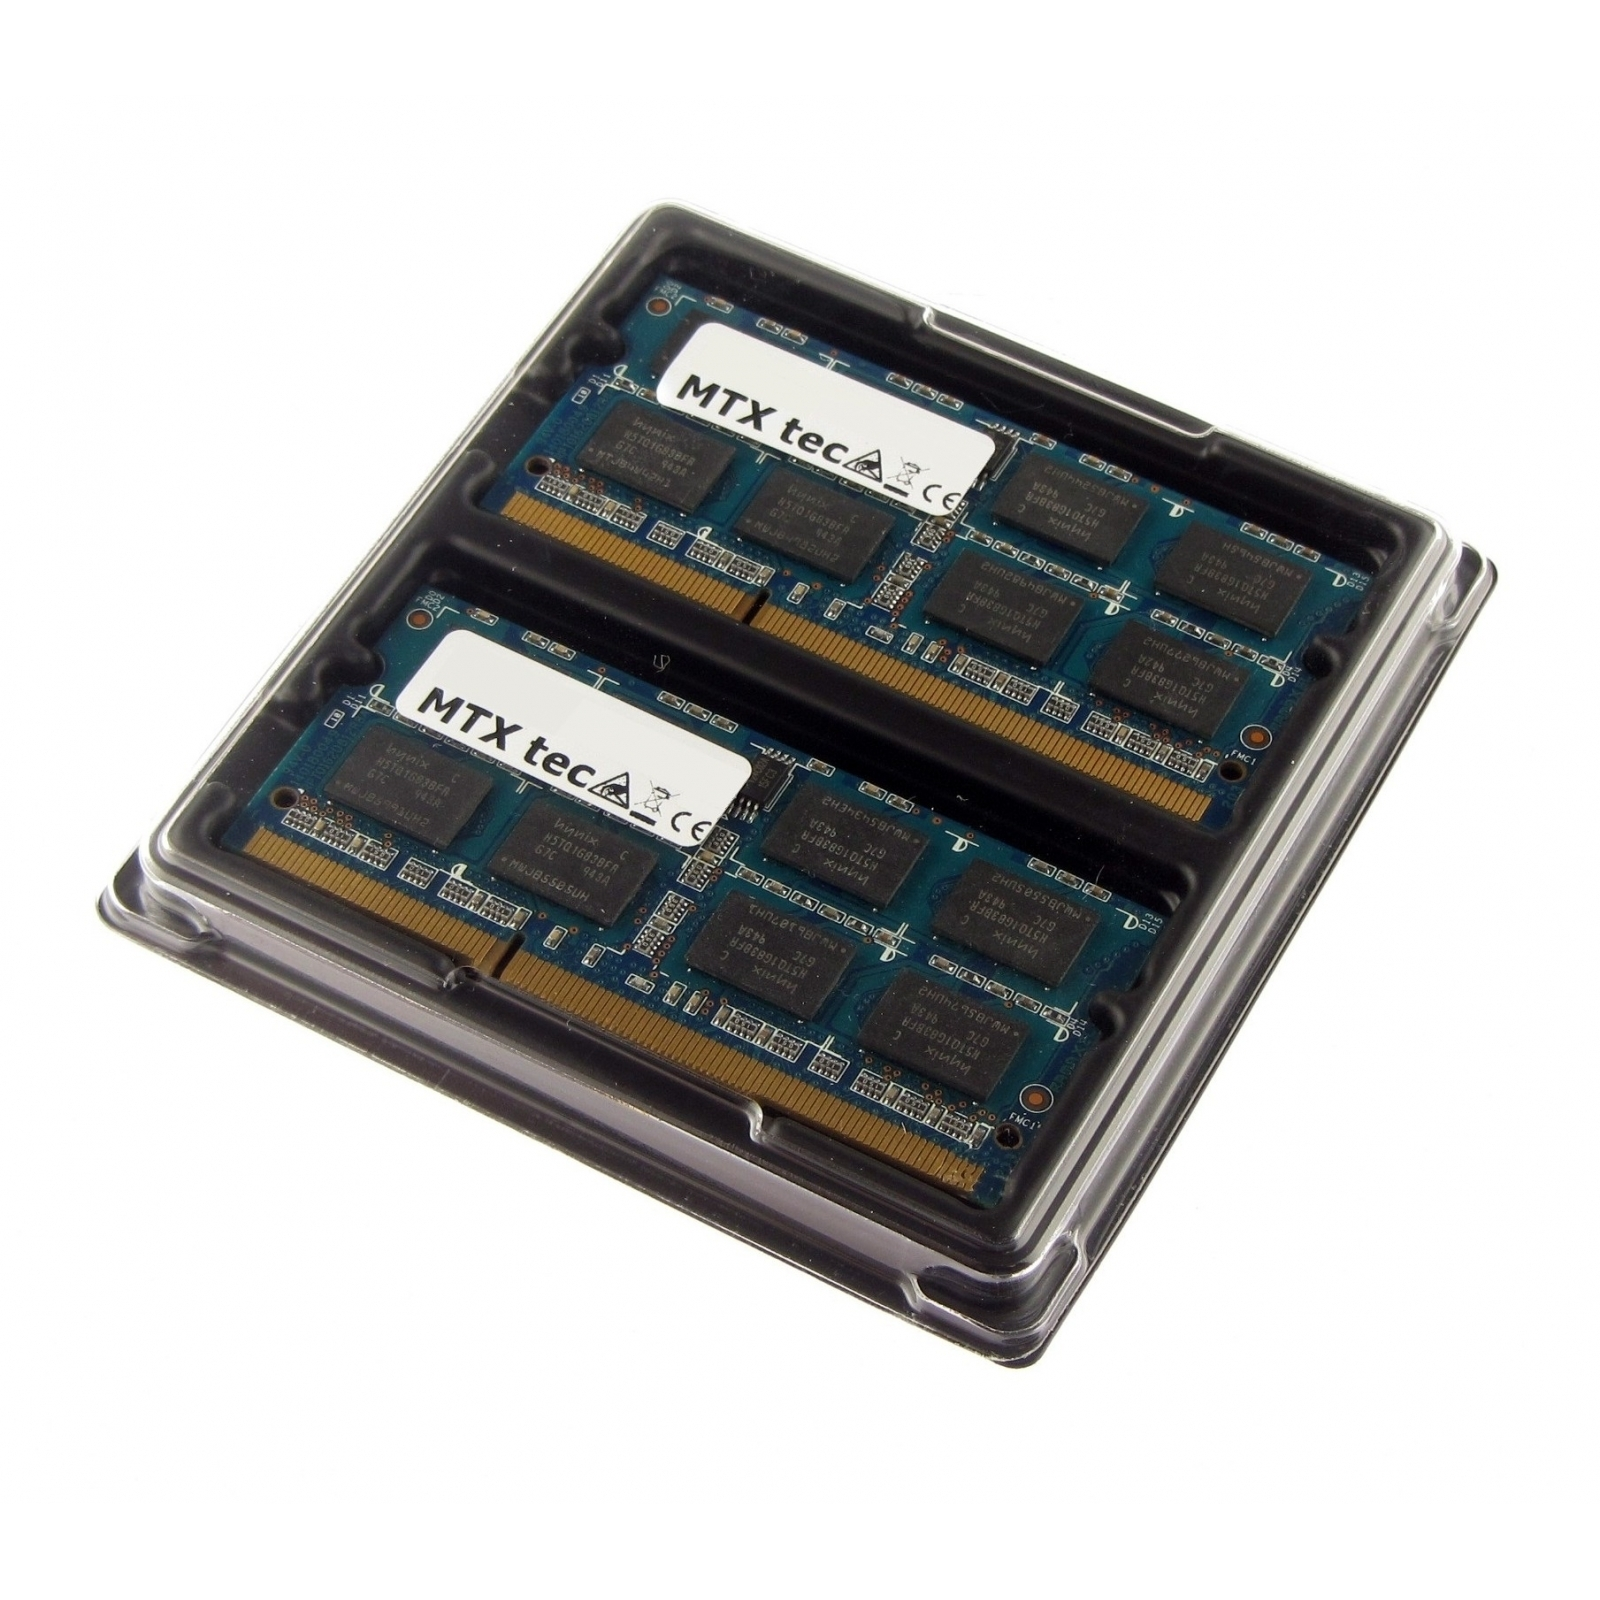 MTXTEC Kit 4GB DDR2 Notebook-Speicher 8GB 4 SODIMM DDR2 800MHz Pin 200 DDR2 Laptop-Speicher 2x RAM PC2-6400, GB